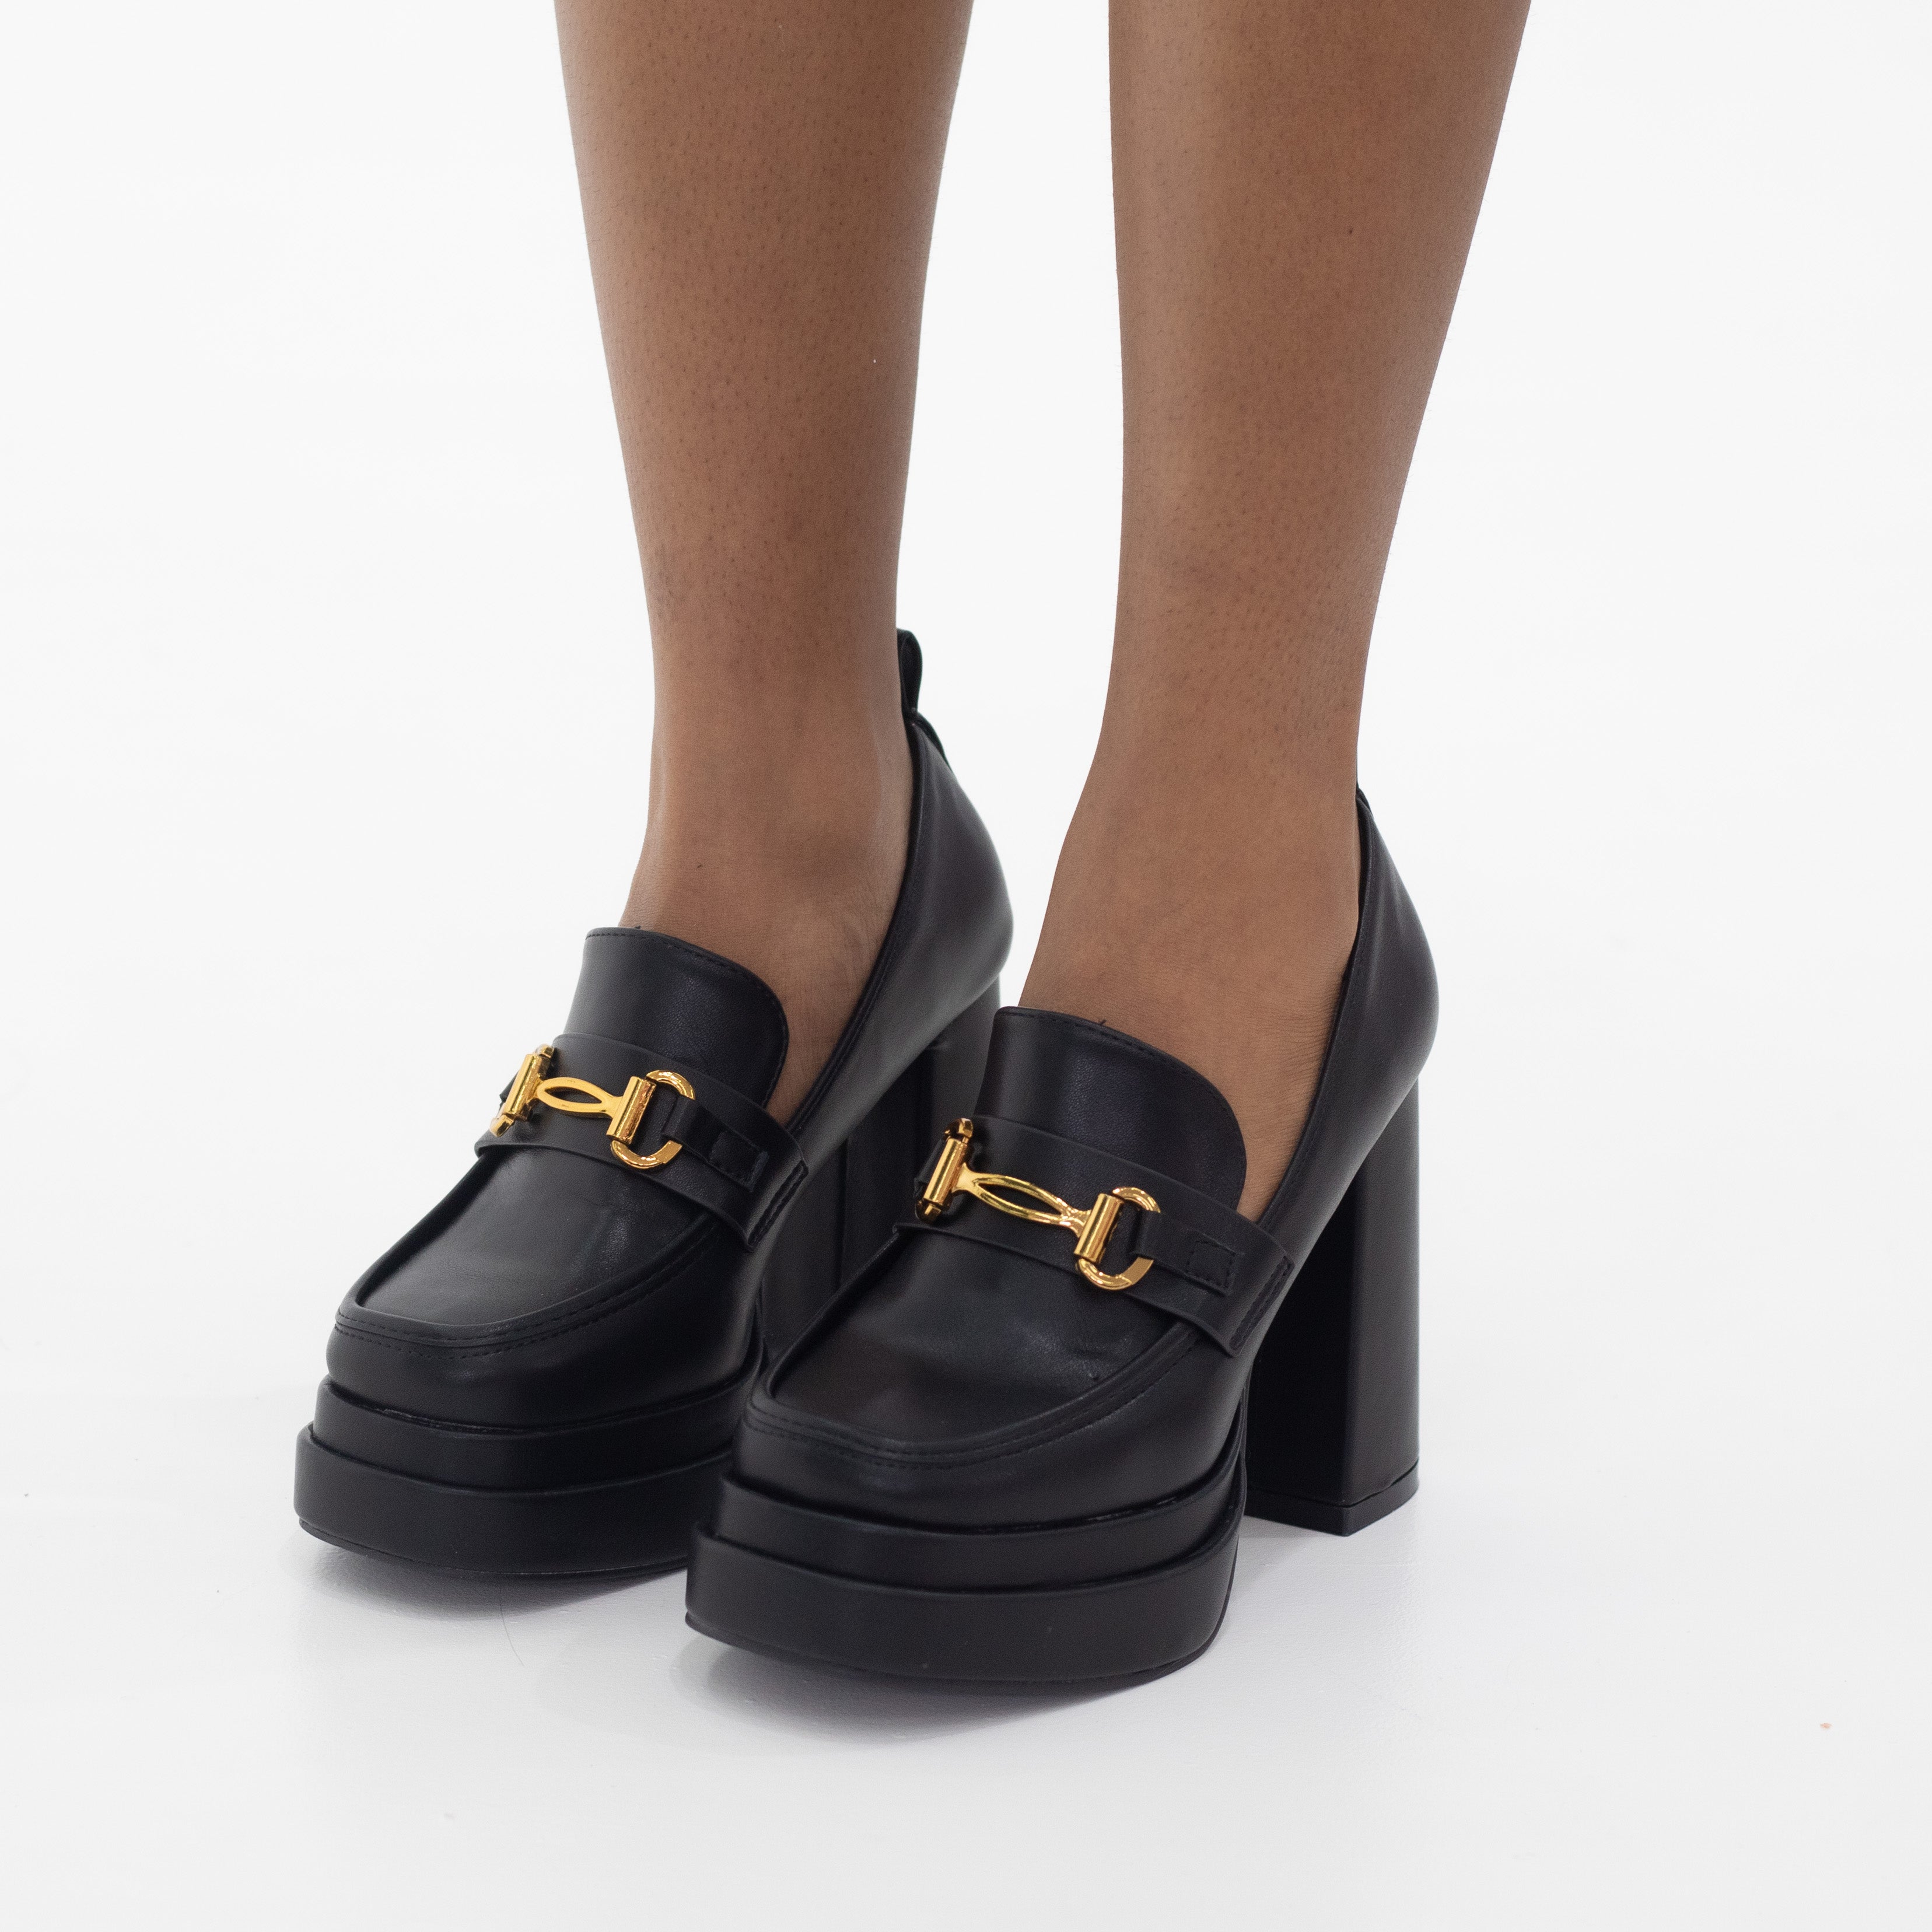 Ohio 11.5cm platform block high heel with trim black